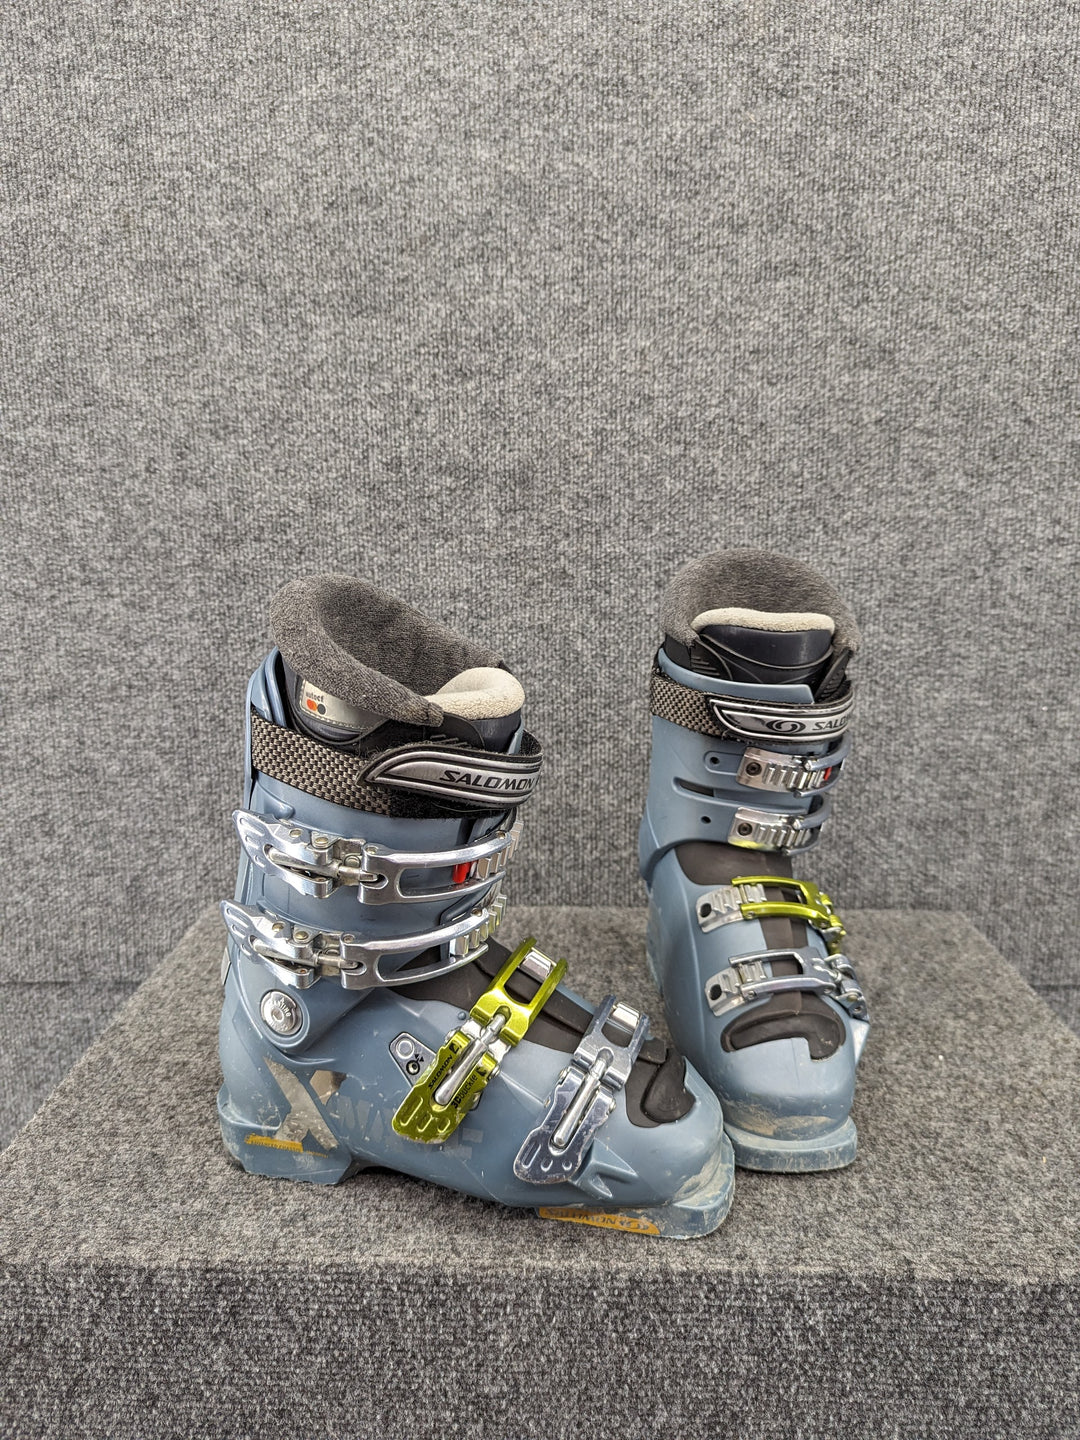 Size Women's Alpine Ski Boots – Rambleraven Gear Trader